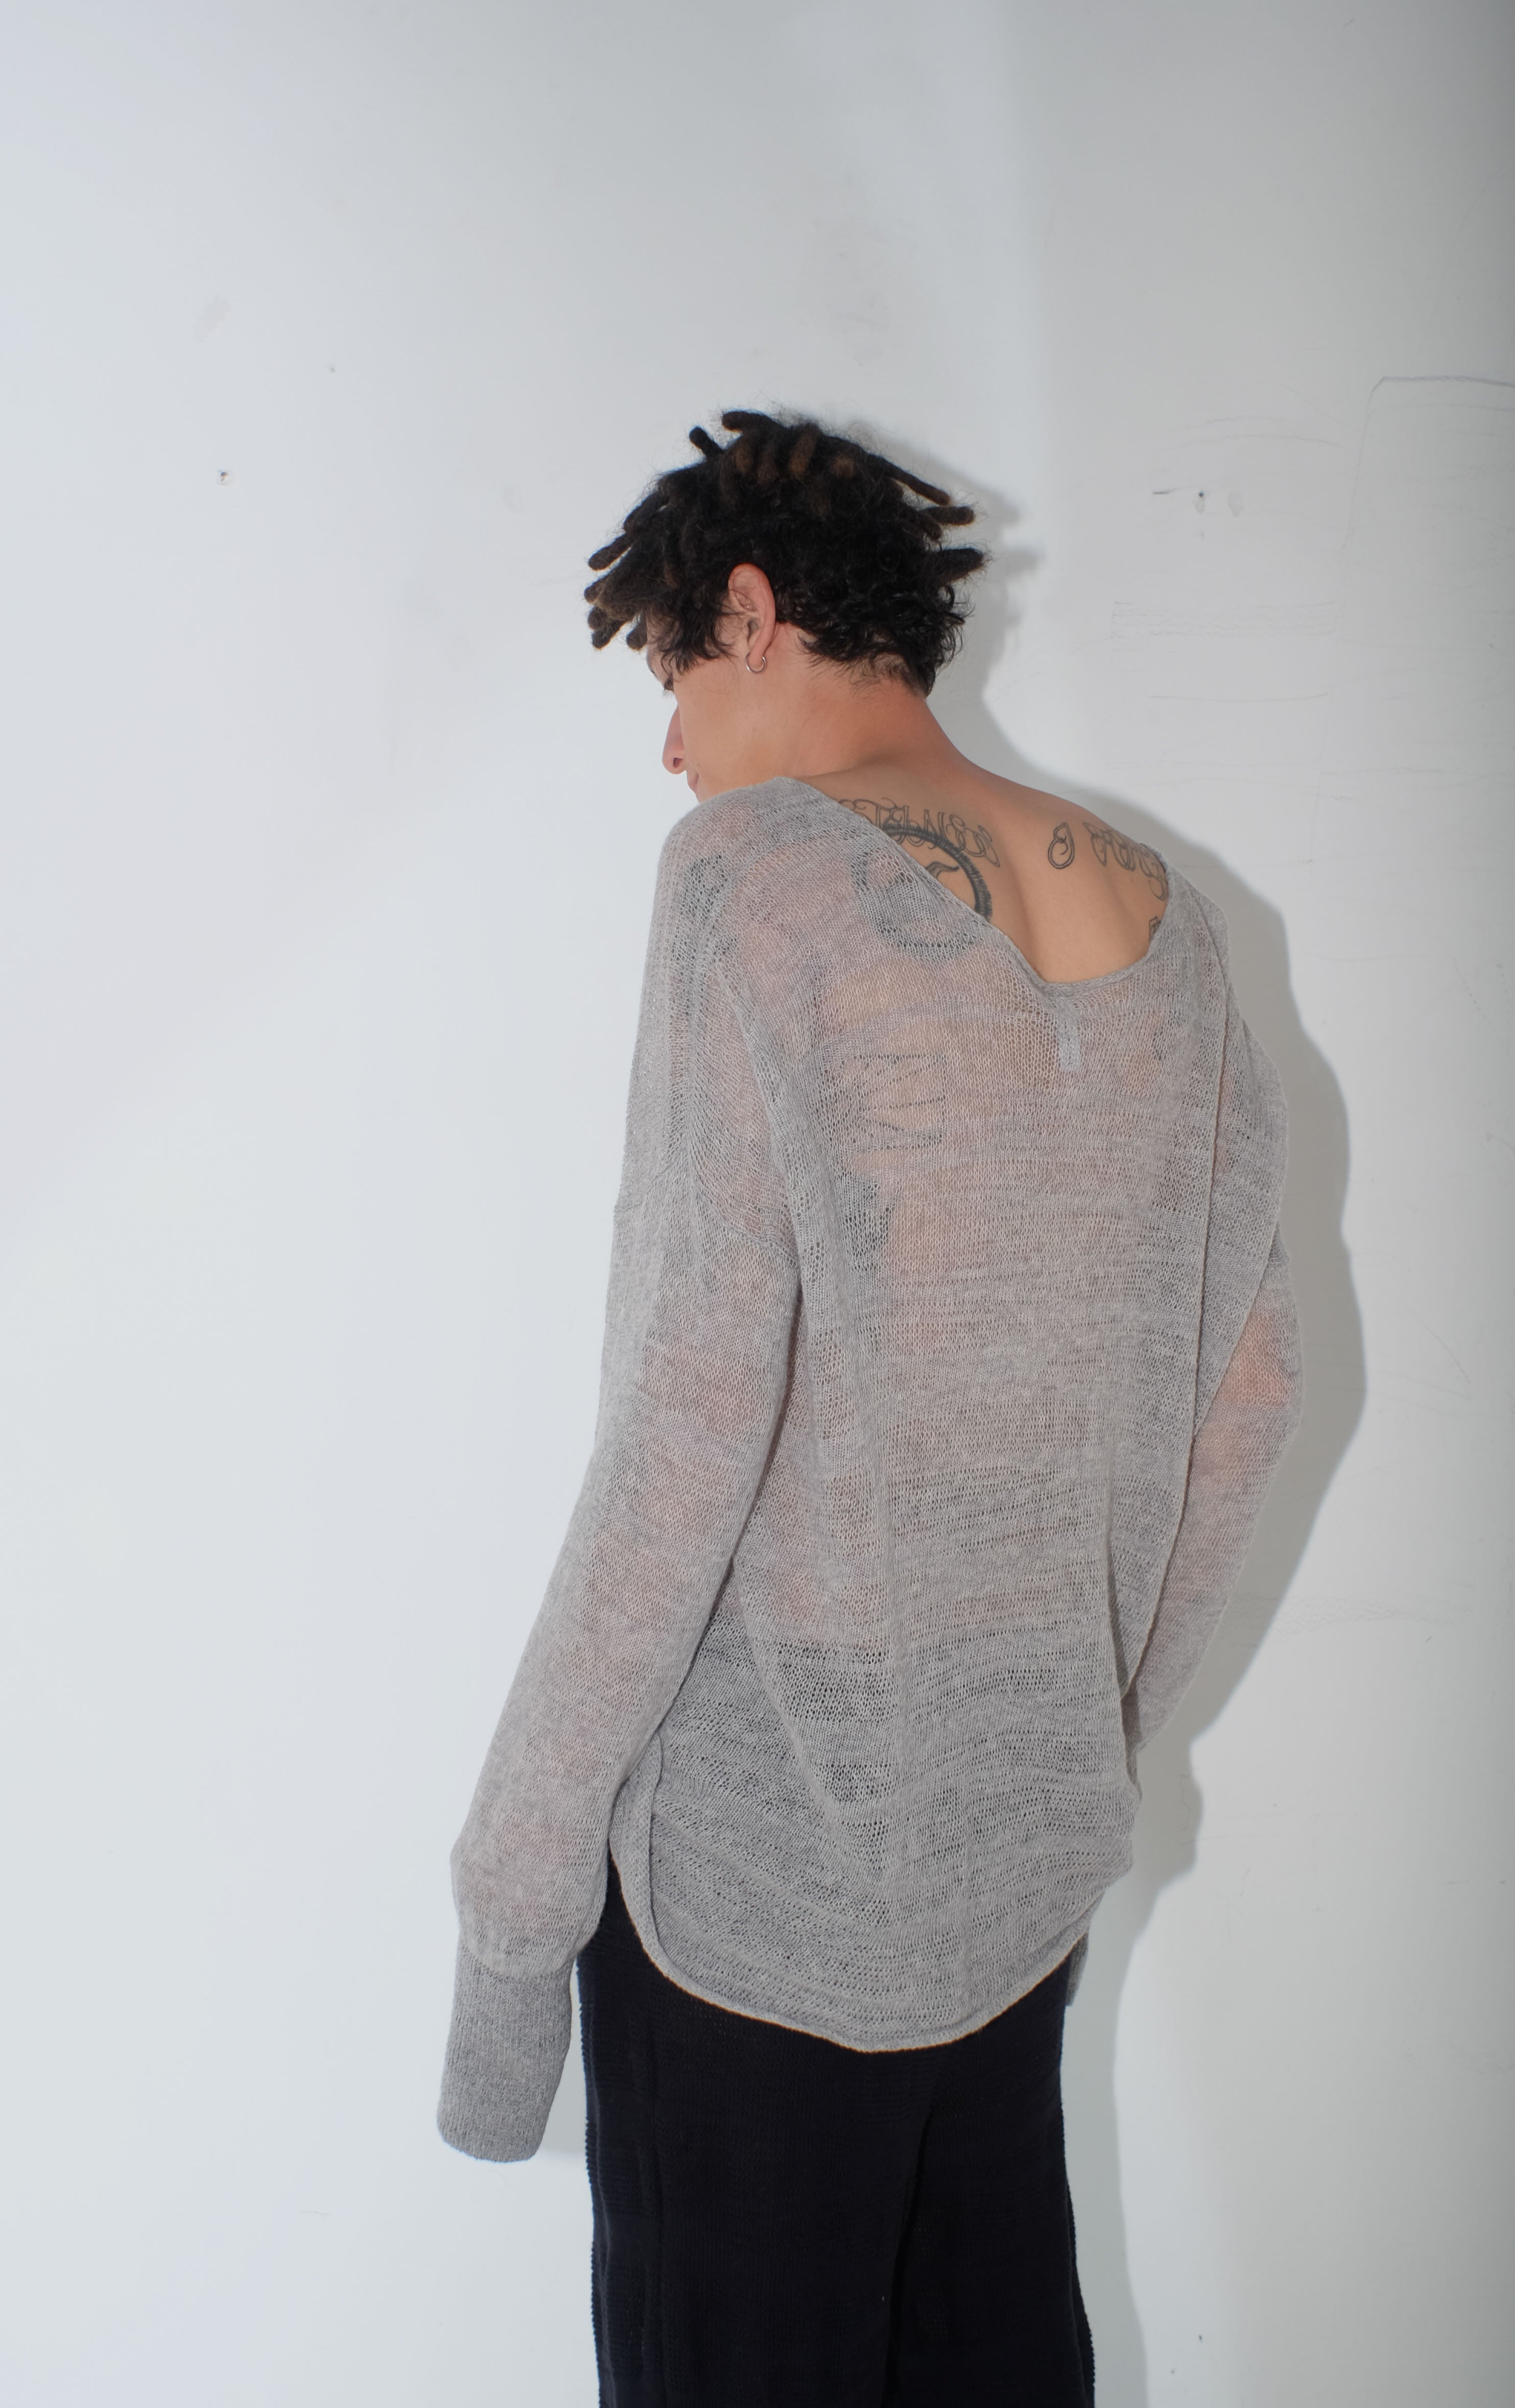 krystal paniagua id longsleeve grey mens top knitwear